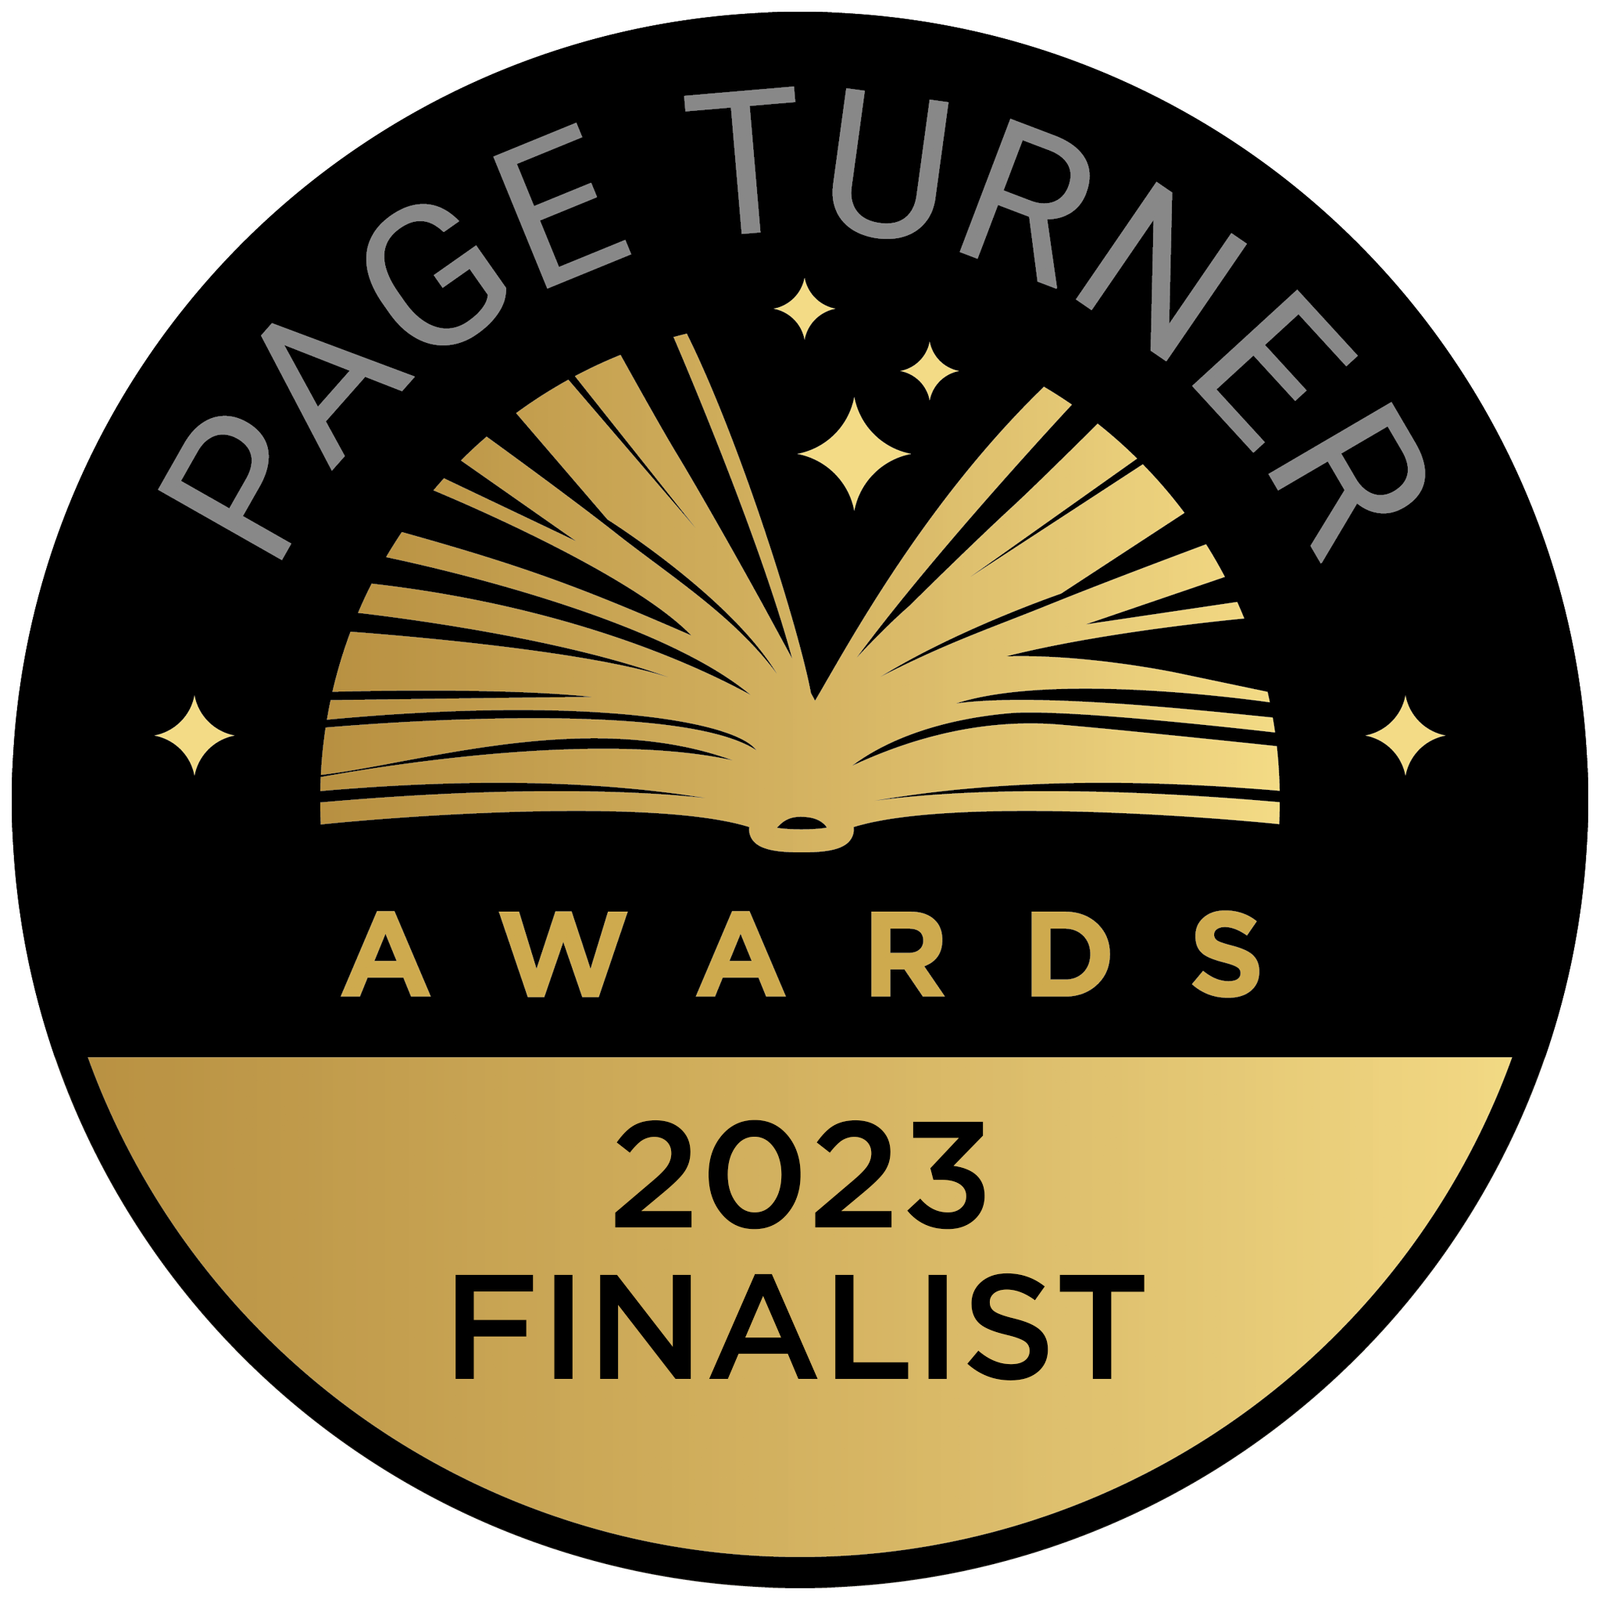 Page Turner Awards Finalist (2023)